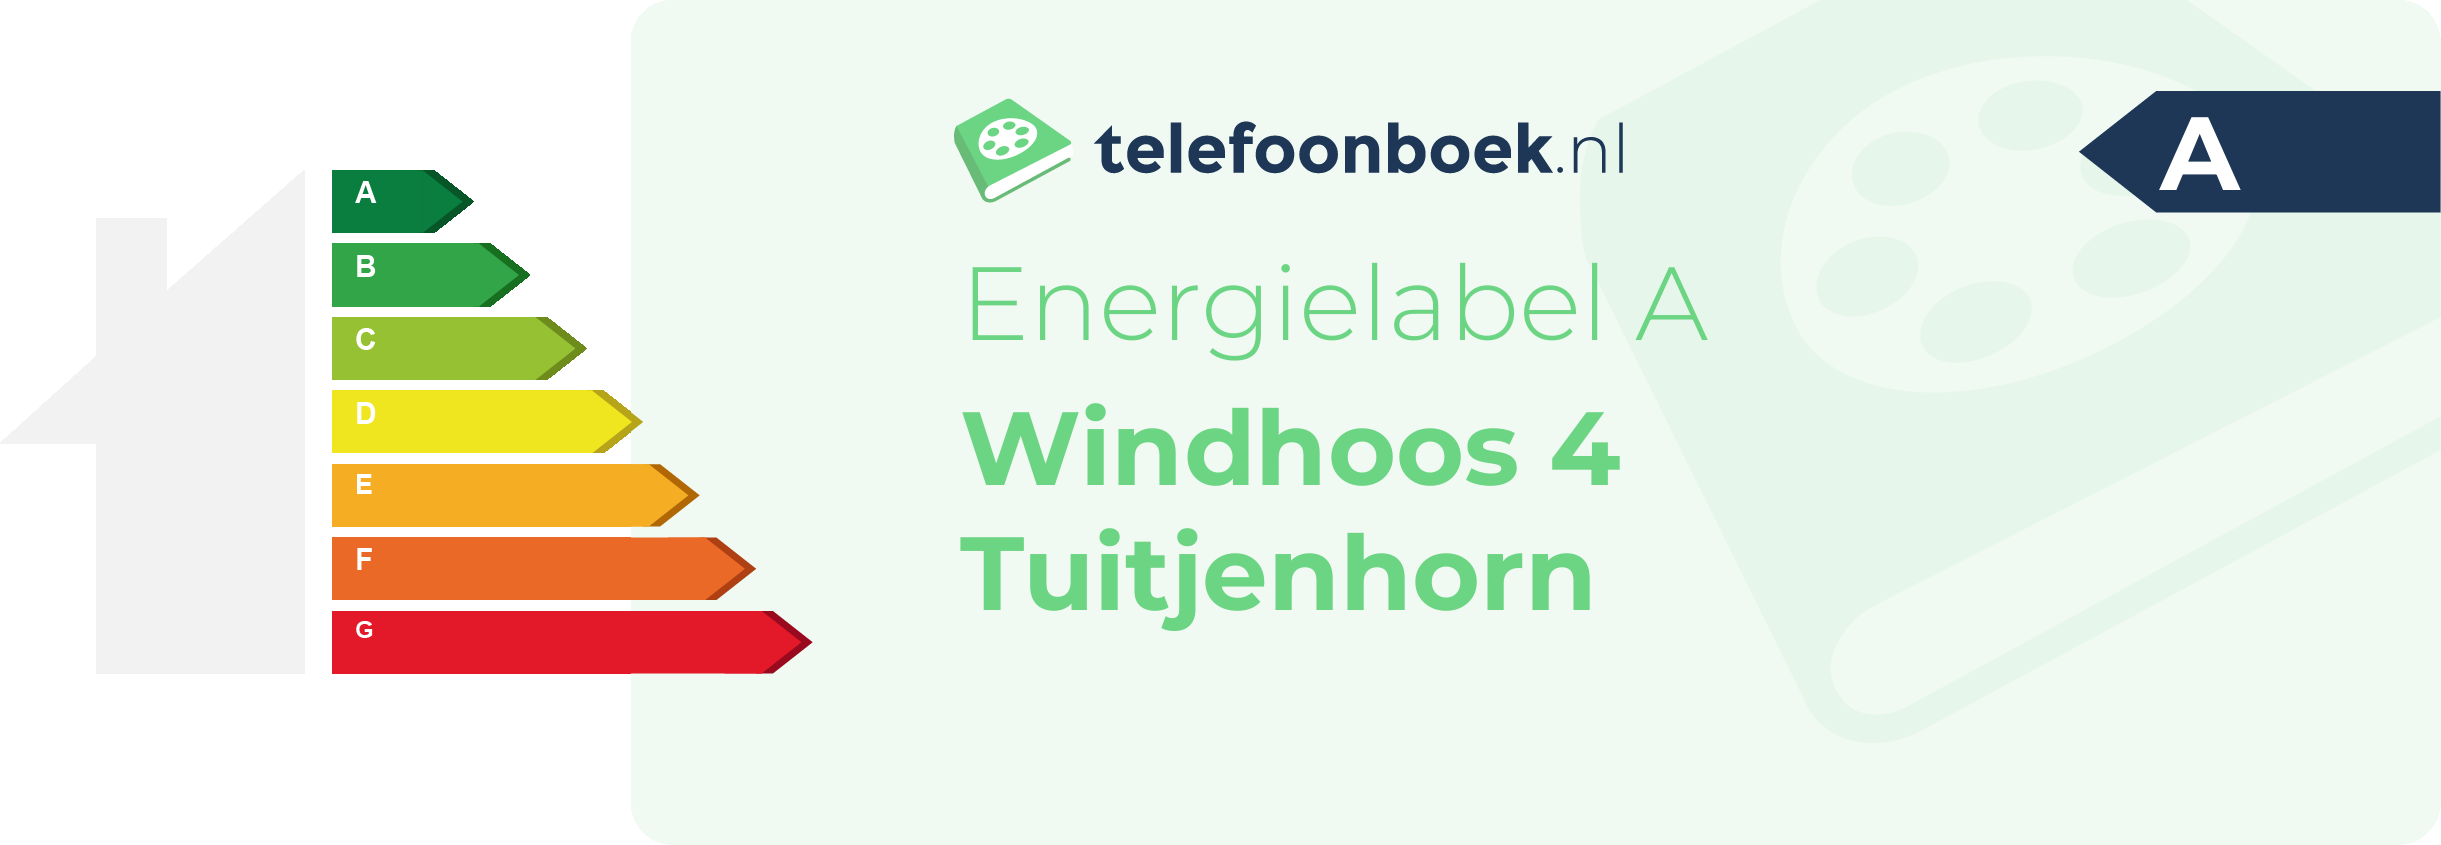 Energielabel Windhoos 4 Tuitjenhorn